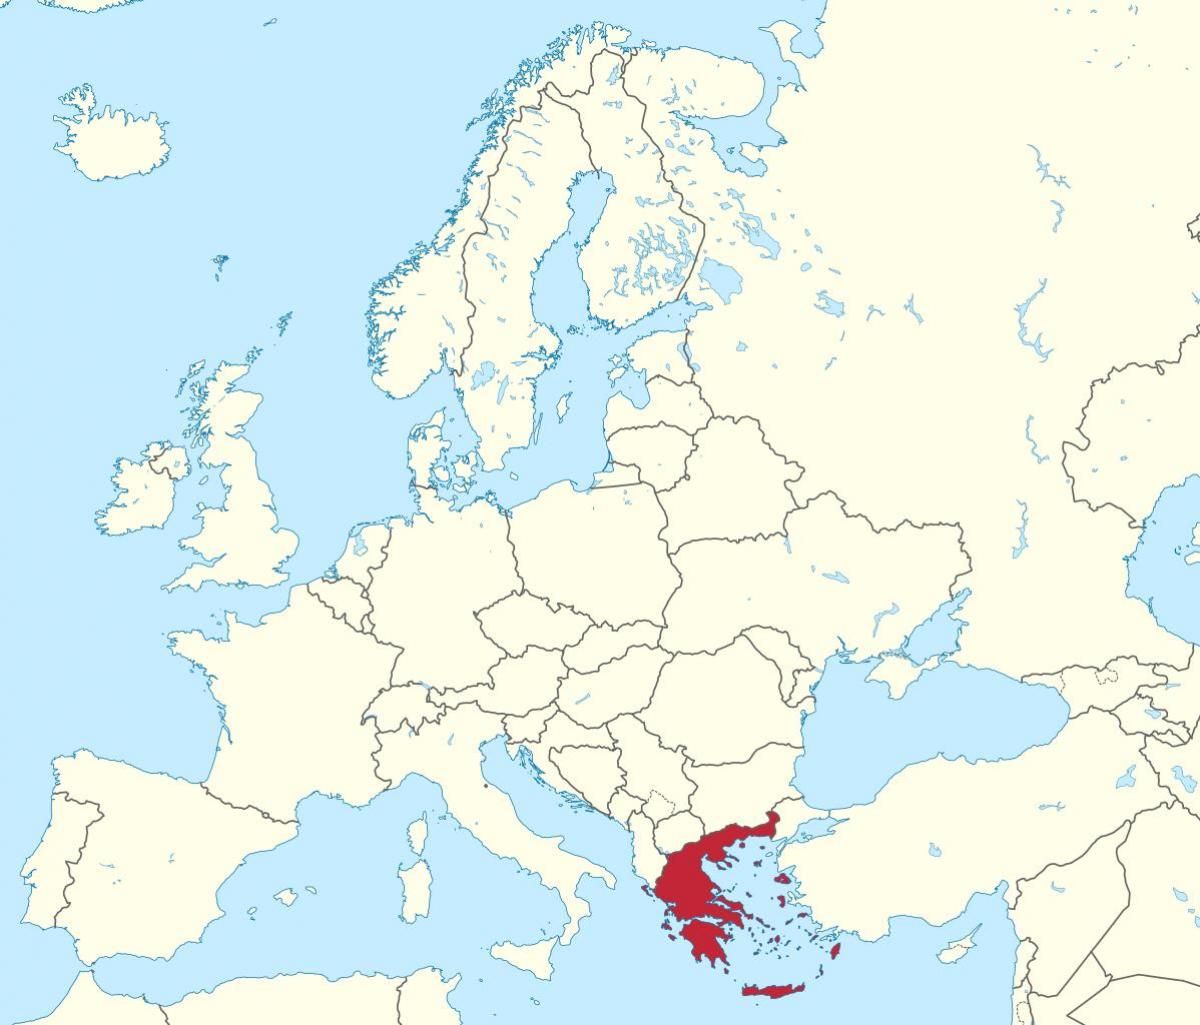 Greece on Europe map